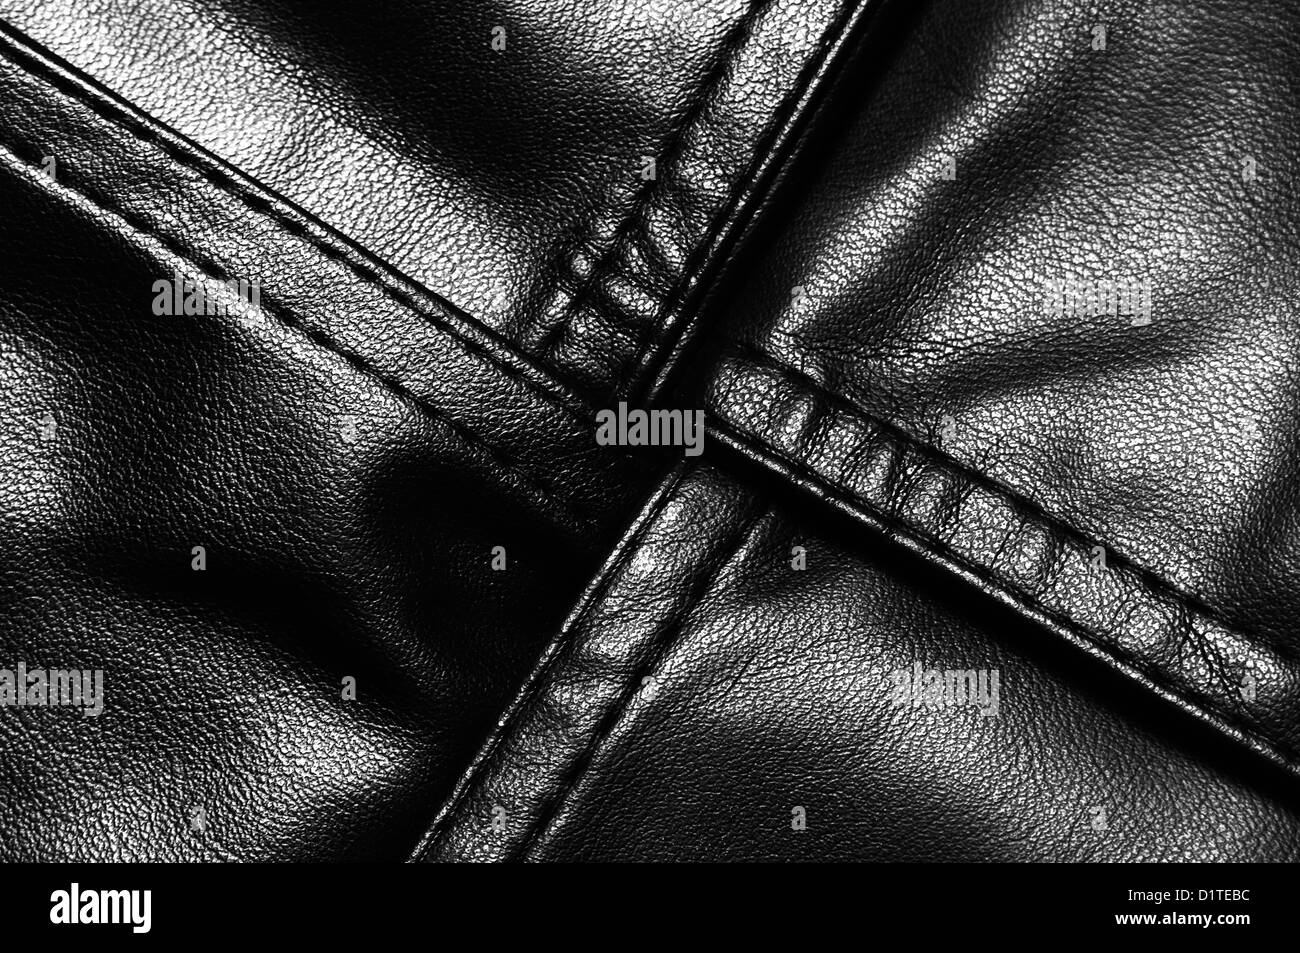 La texture de cuir noir Banque D'Images